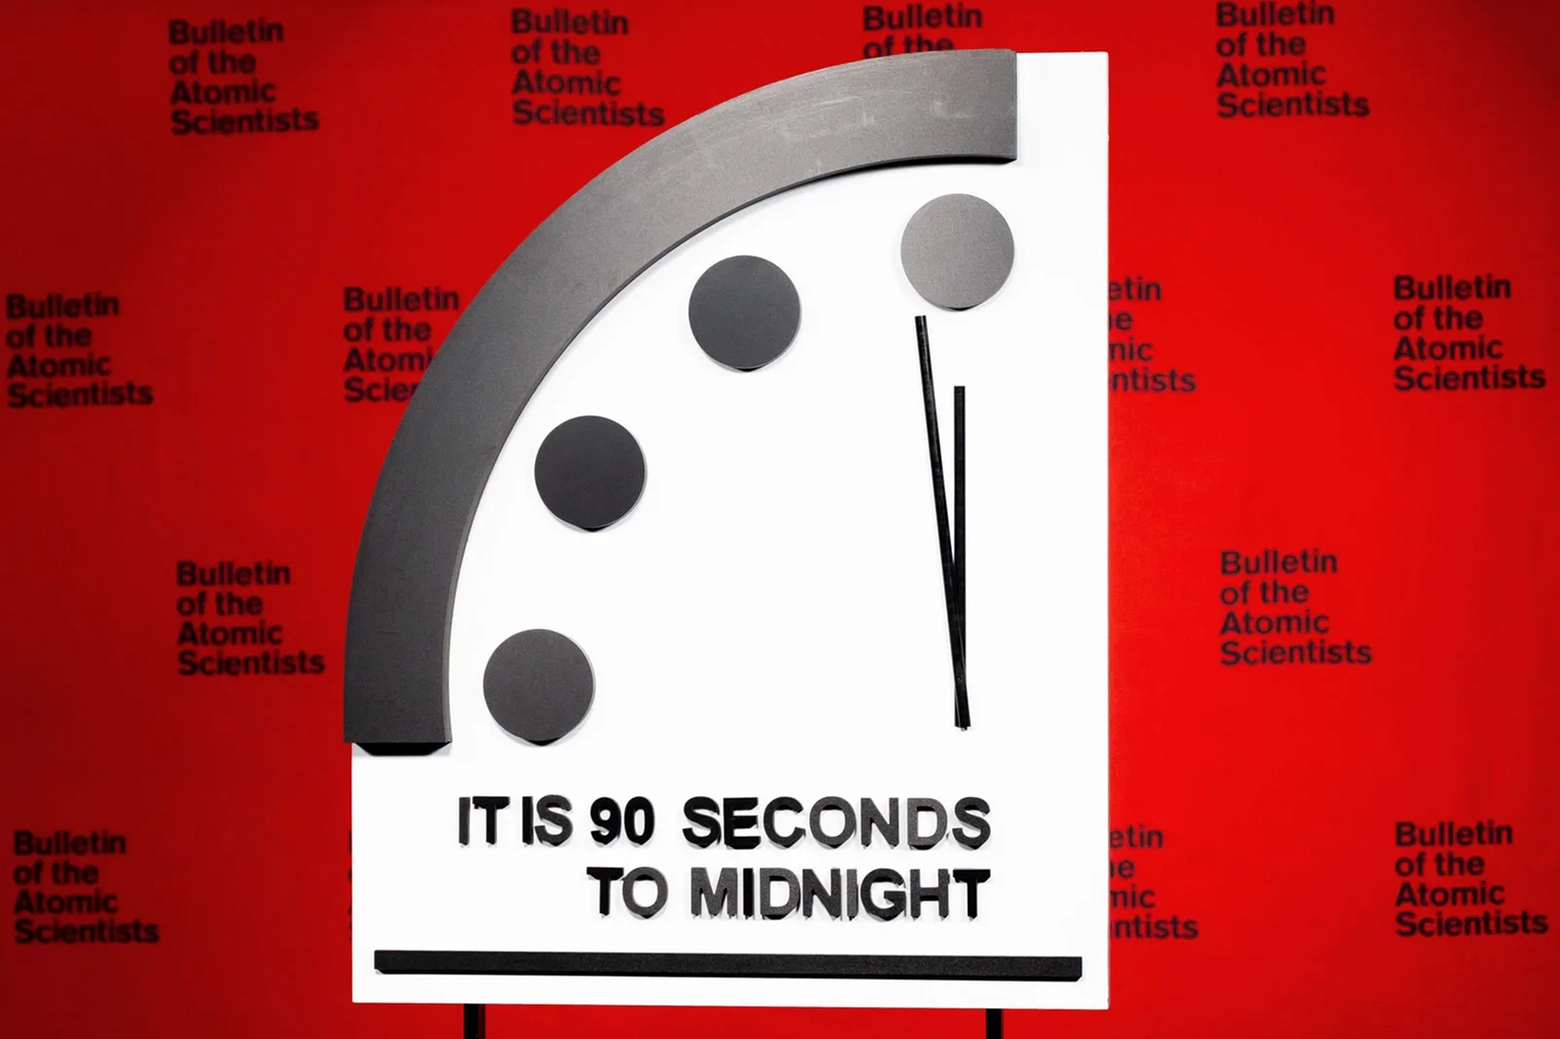 Doomsday clock: 90 secondi all'apocalisse